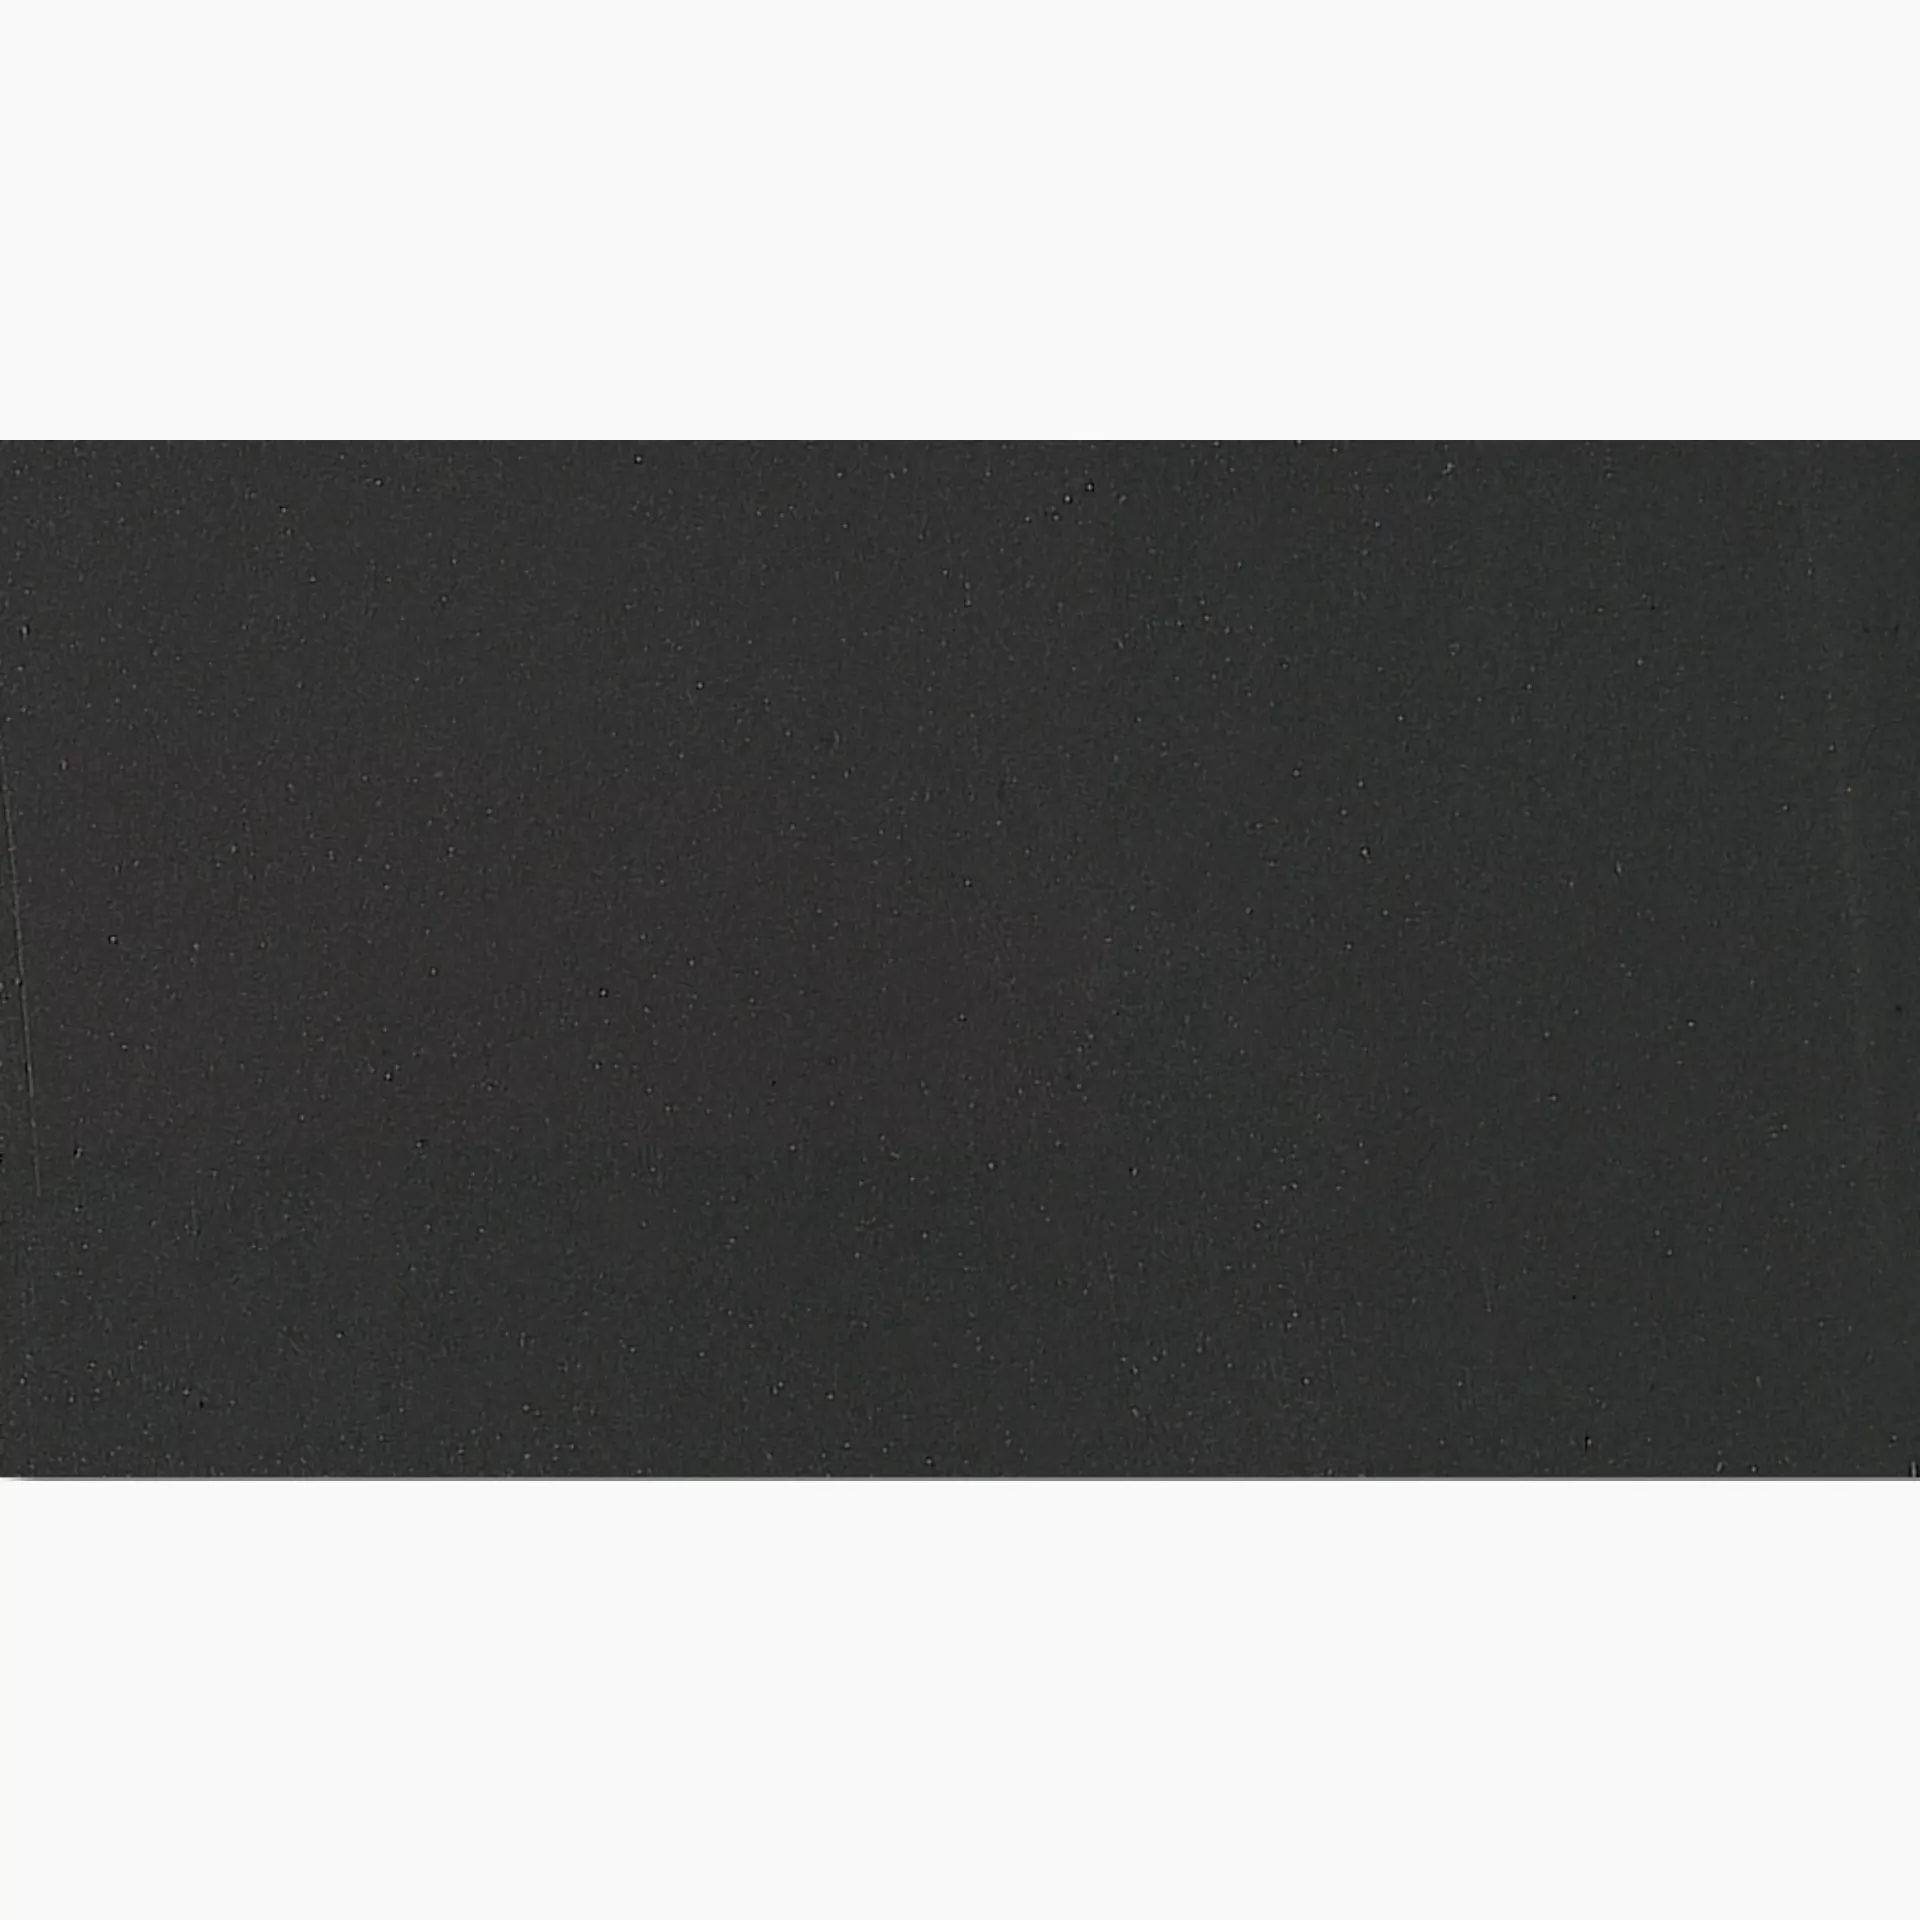 Coem Tinte Unite Warm Black Naturale TU3617R 30x60cm rectified 11mm